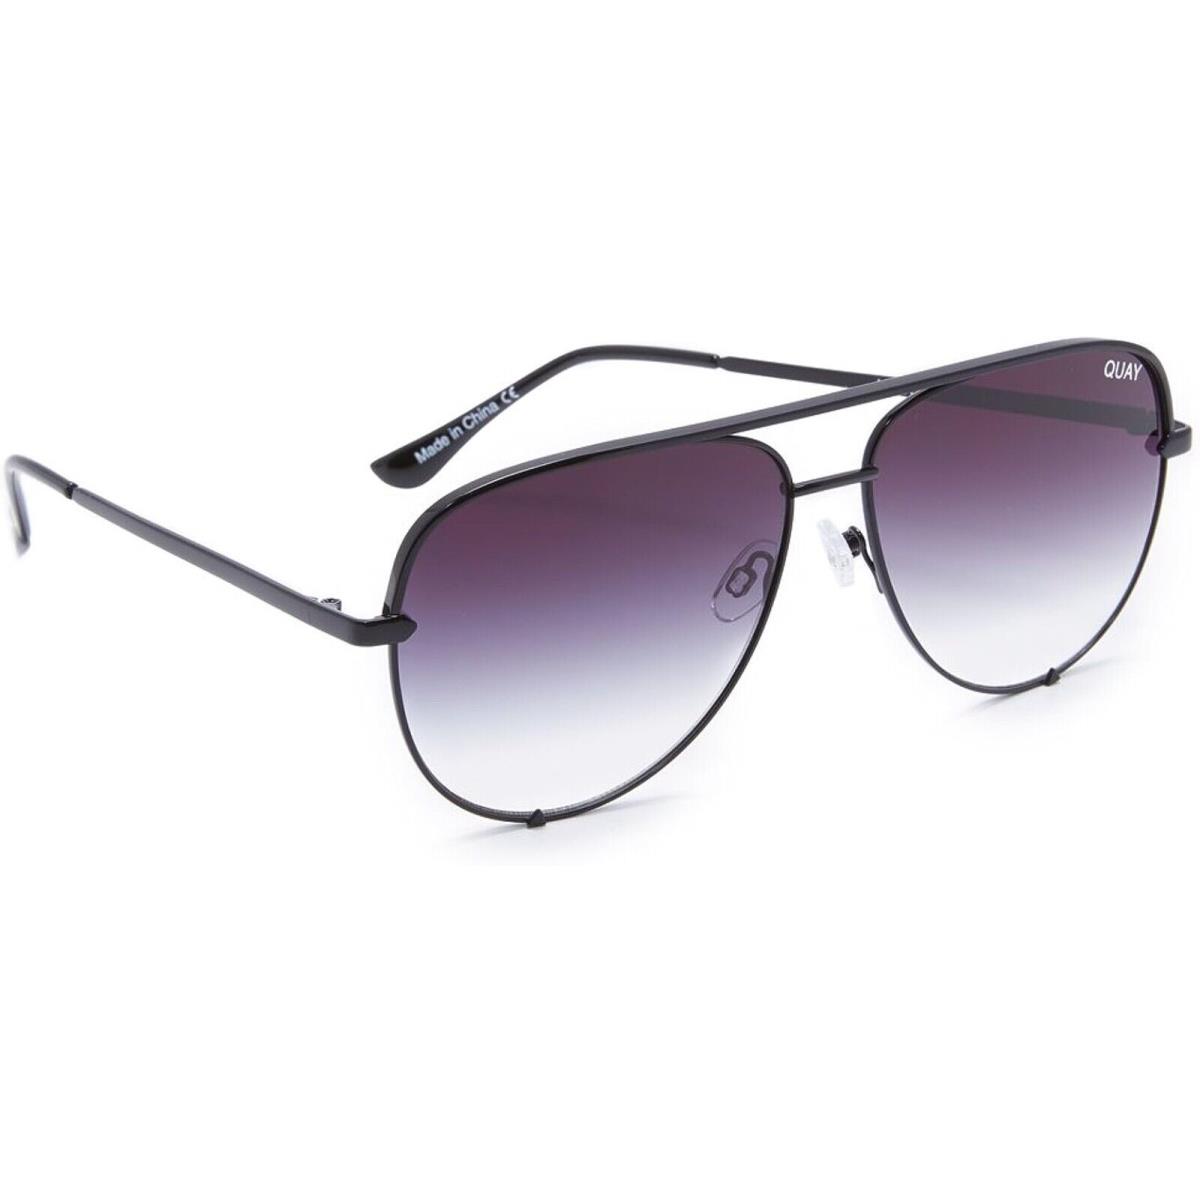 Quay Australia Sunglasses Classic Oversized Aviator Unisex W/case Cloth - Black/Fade, Lens: Dark Grey